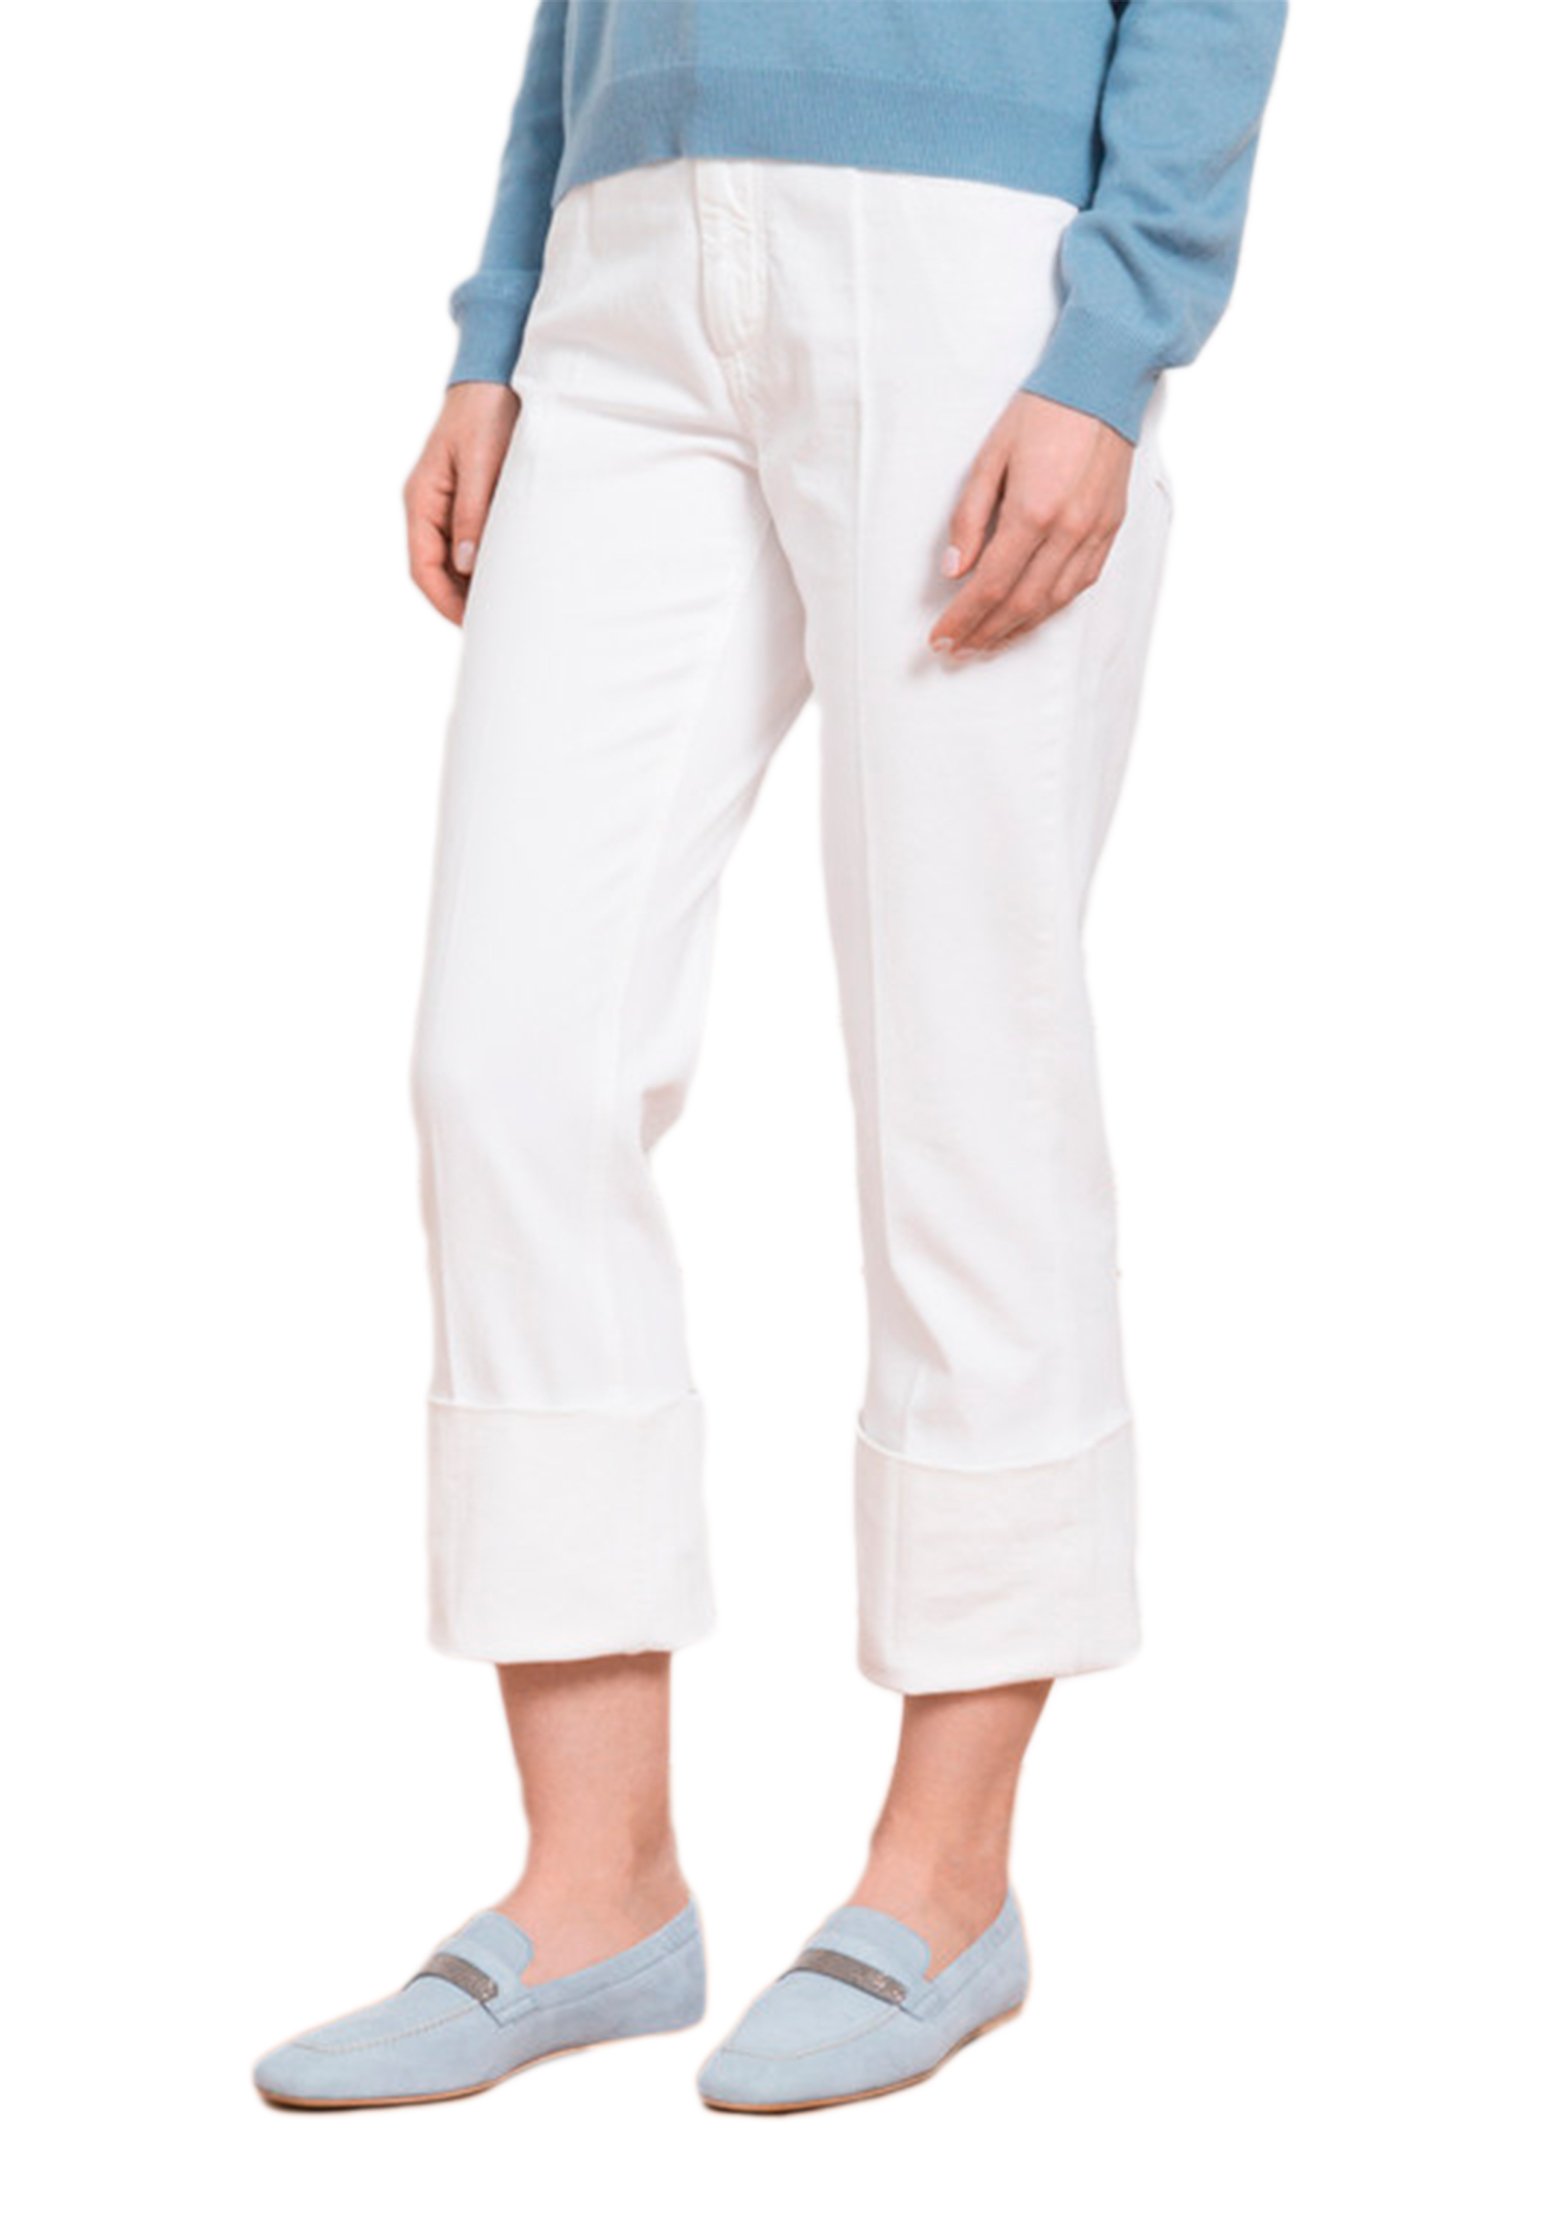 Pants BRUNELLO CUCINELLI Color: white (Code: 367) in online store Allure